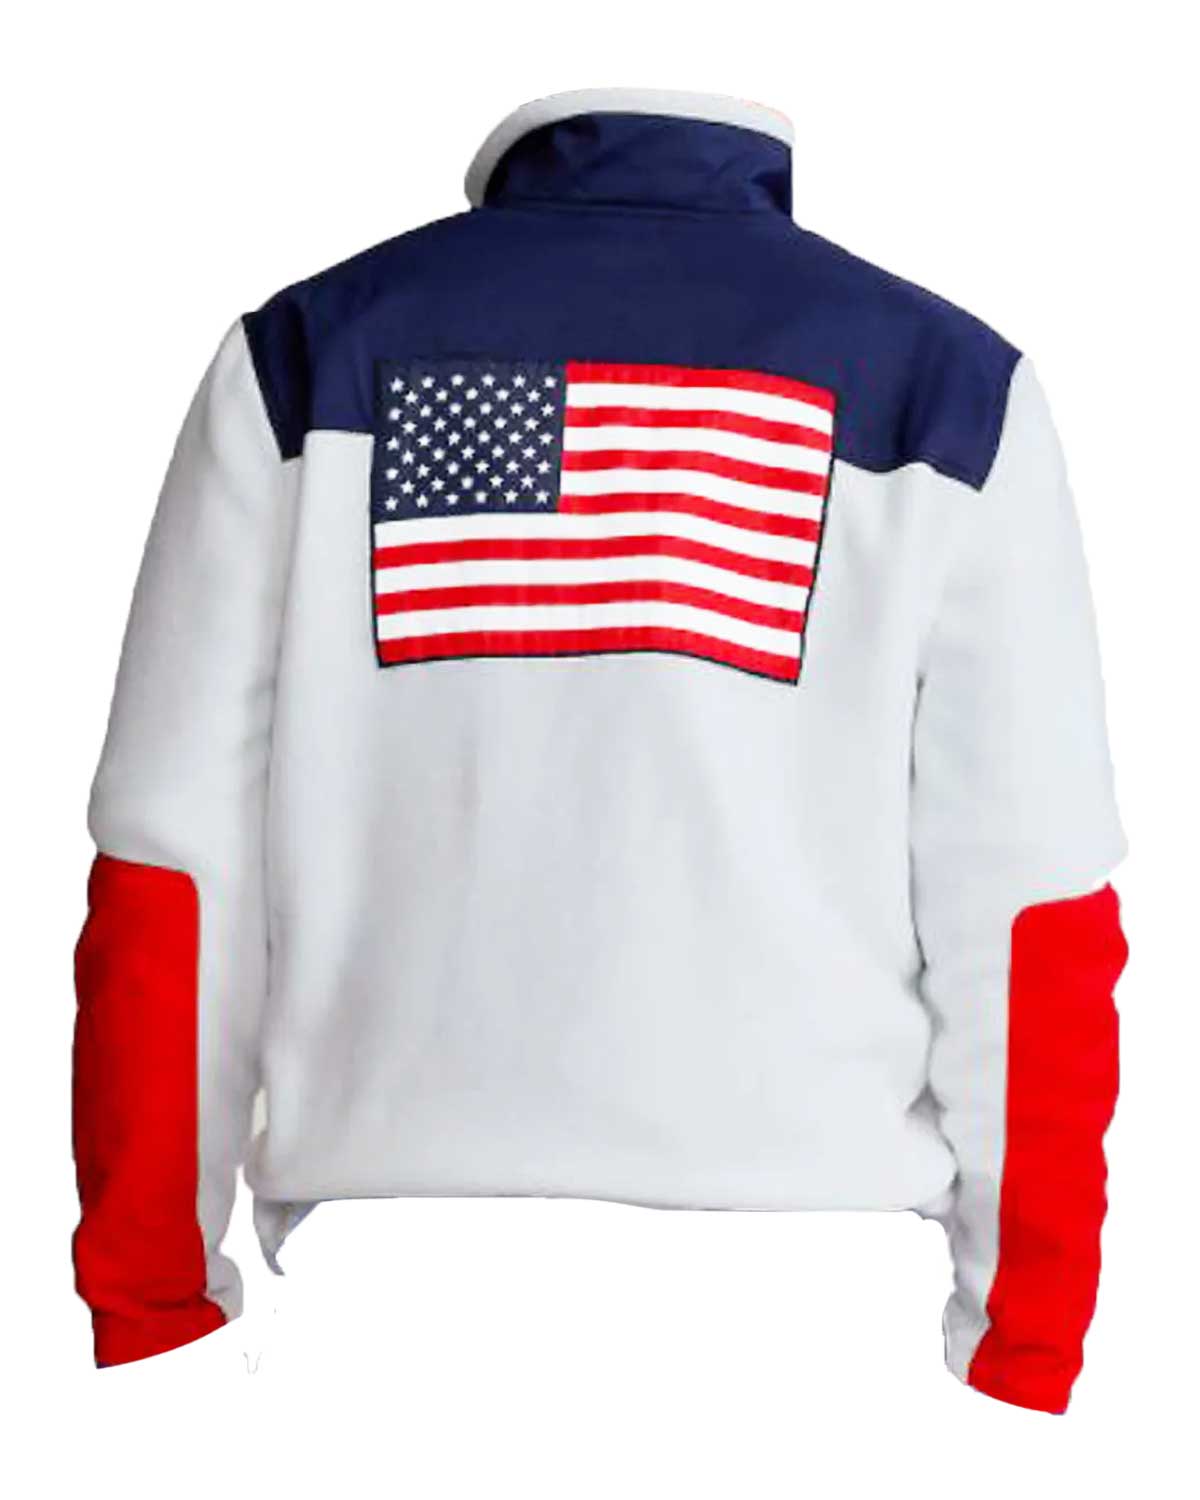 USA Team 2022 Olympics Ceremony Navy Blue And White Jacket 